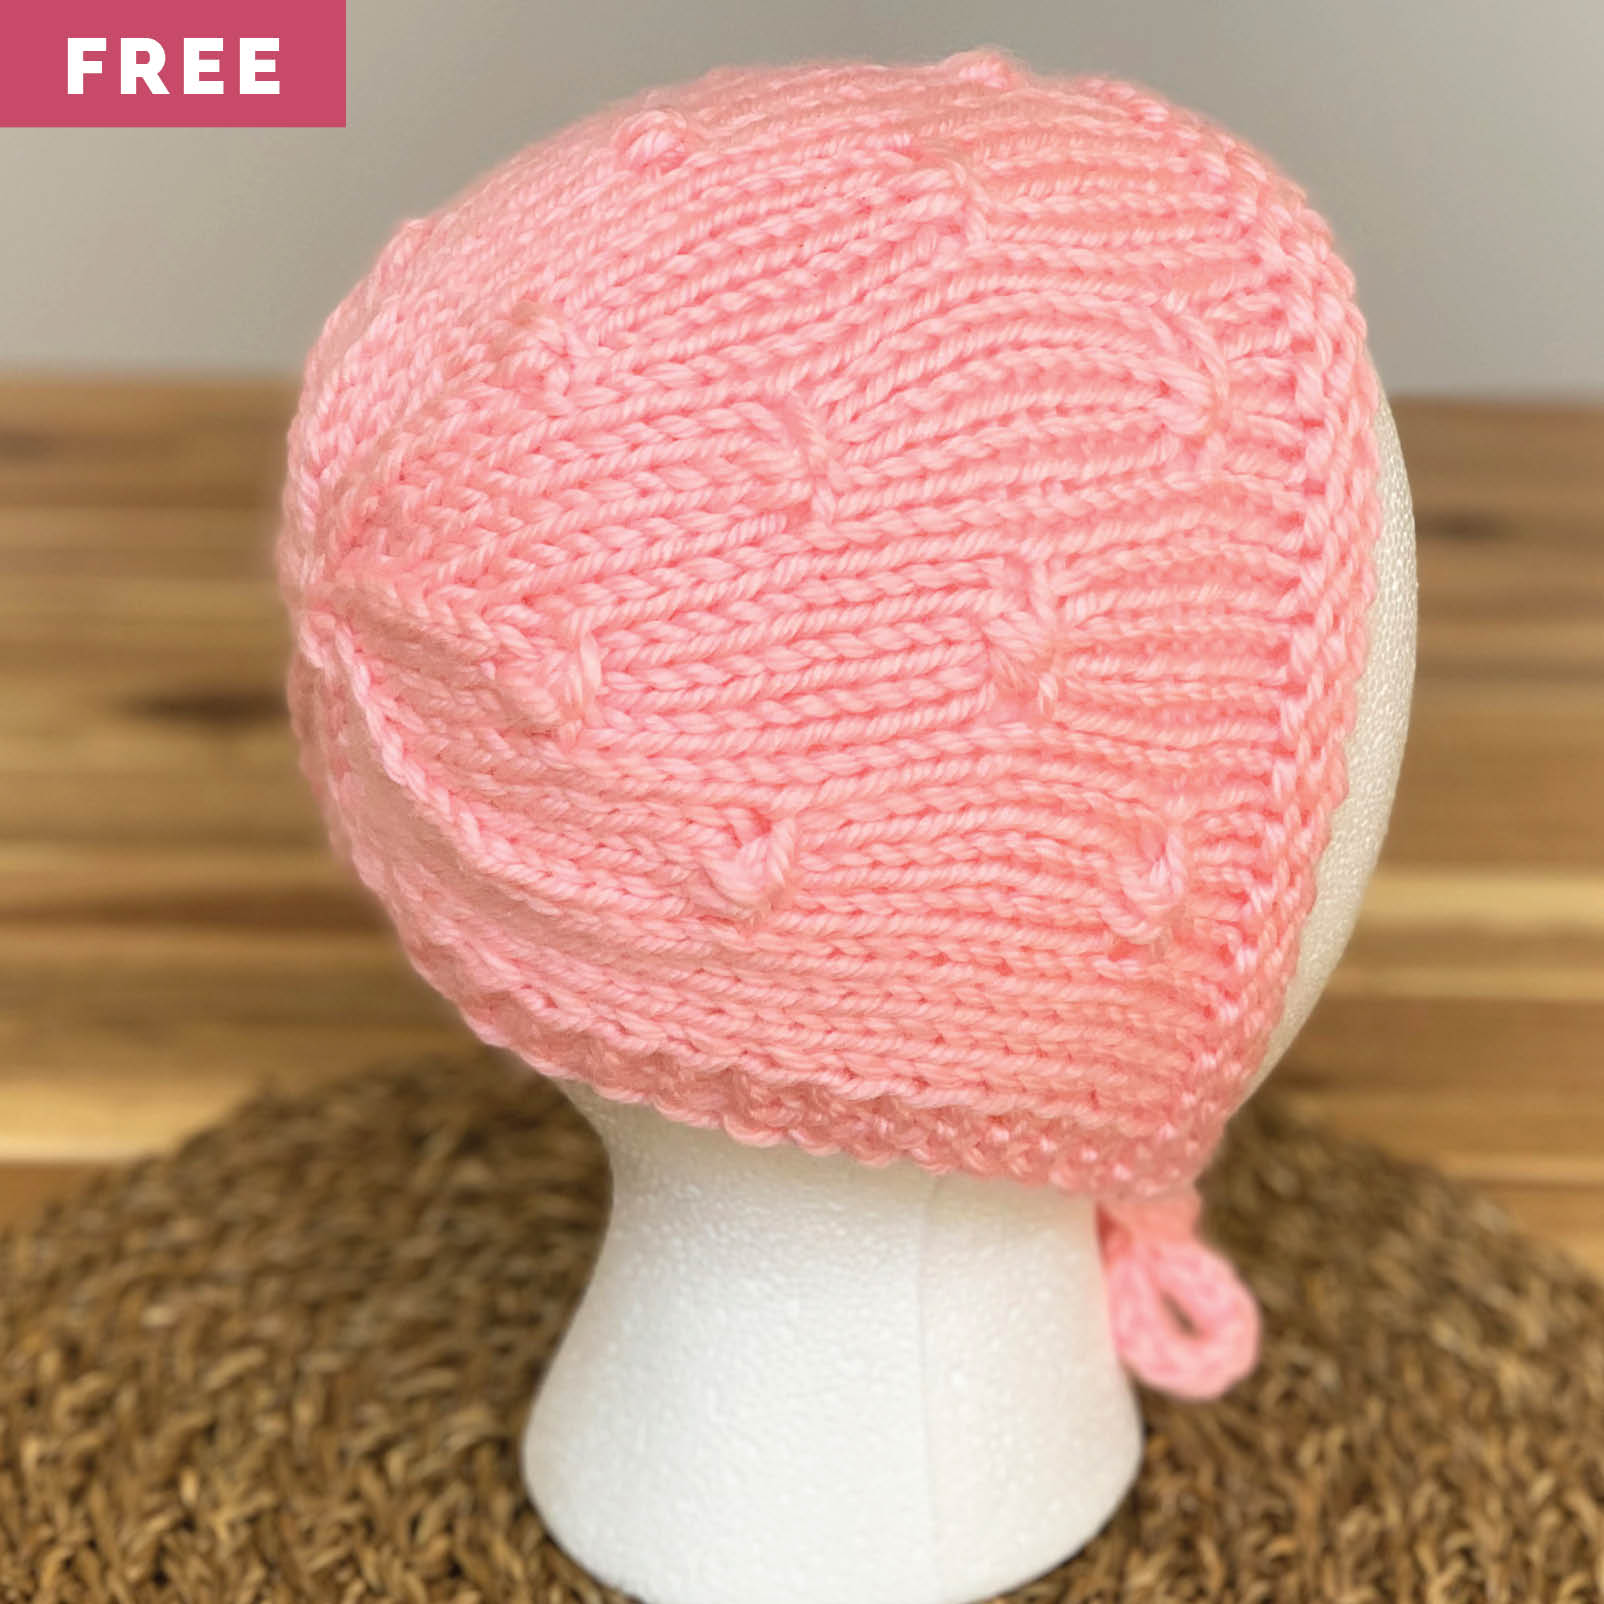 Free Knitting Pattern - Flower Knot Baby Bonnet